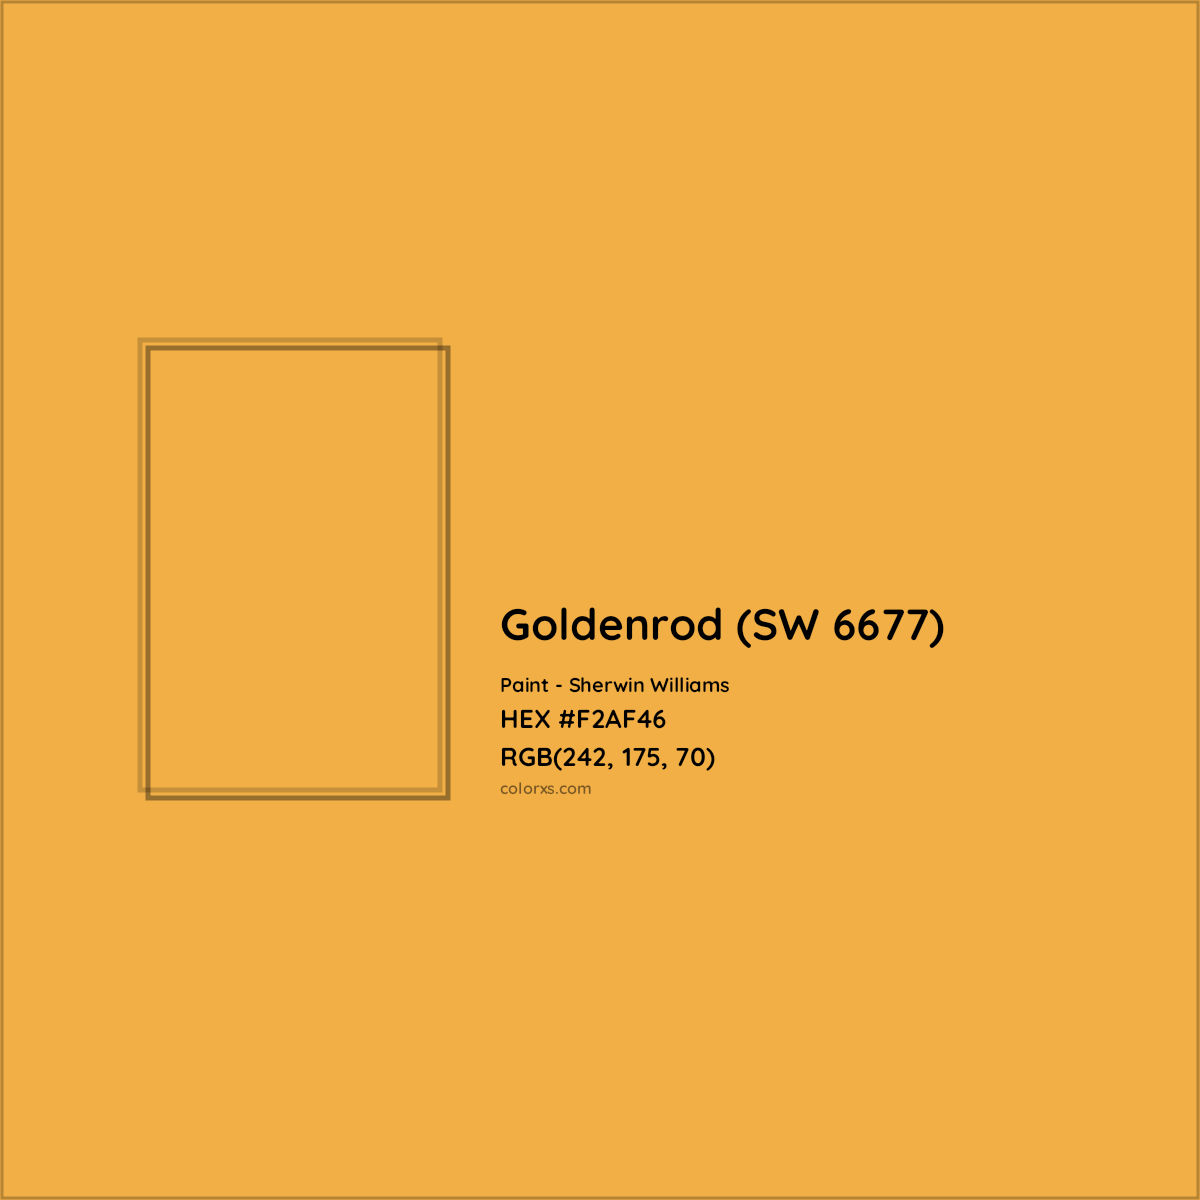 HEX #F2AF46 Goldenrod (SW 6677) Paint Sherwin Williams - Color Code